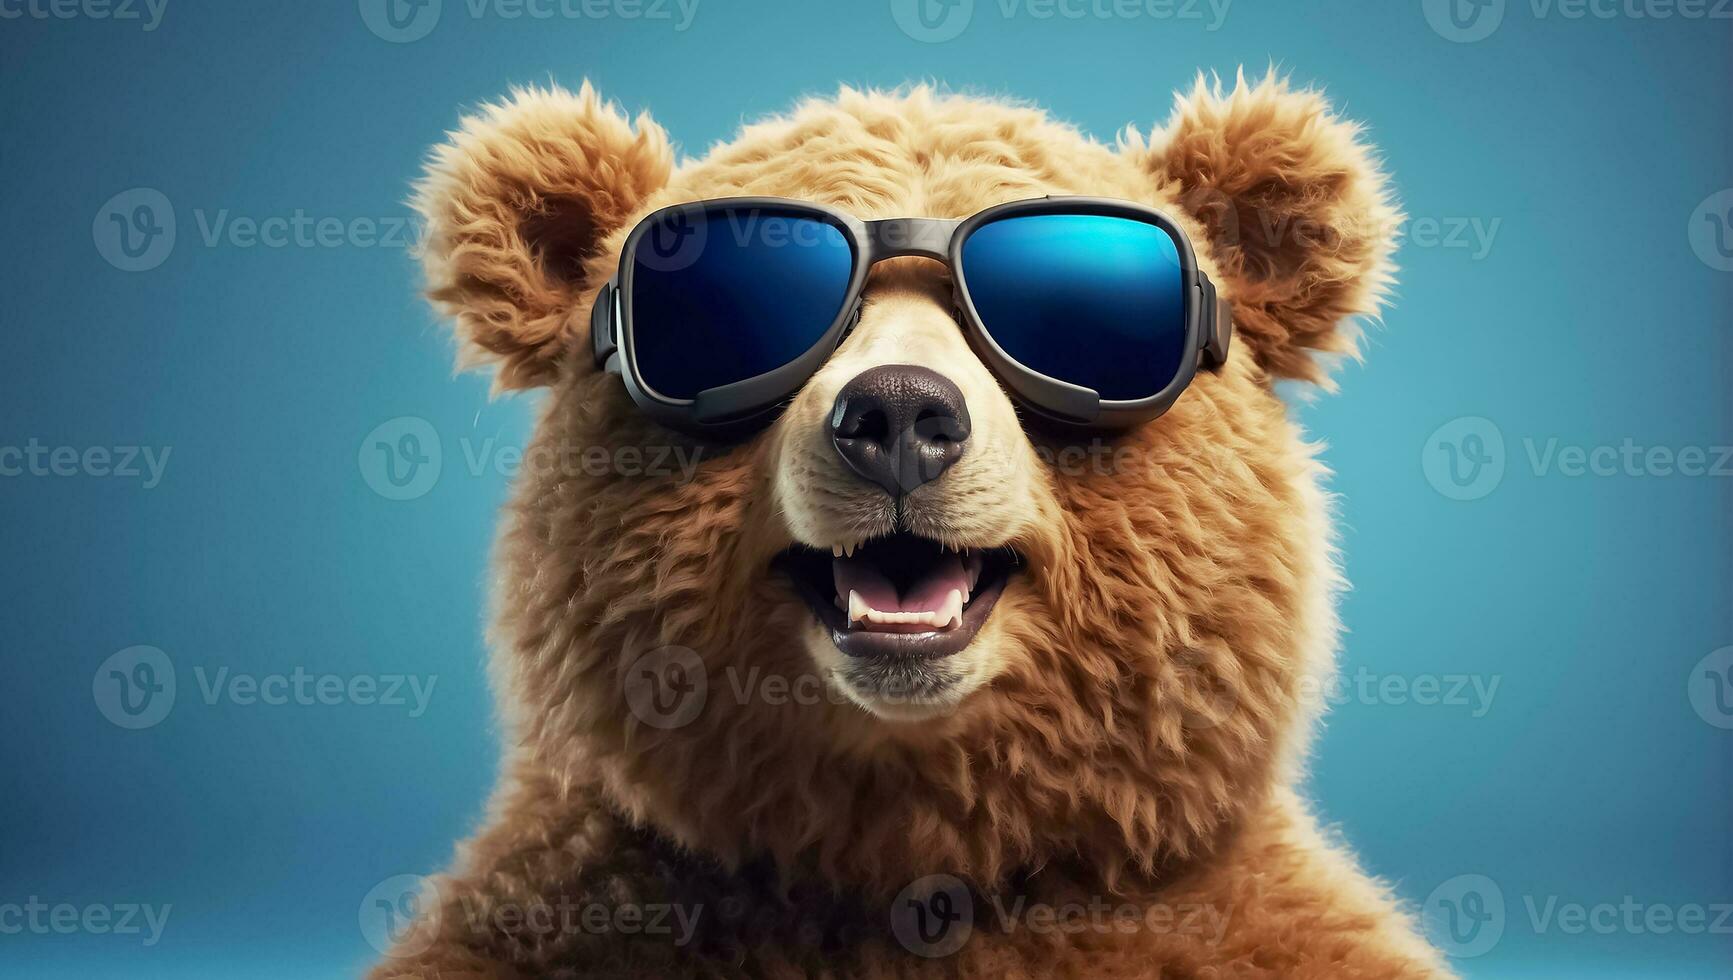 AI generated Cute bear in sunglasses photo